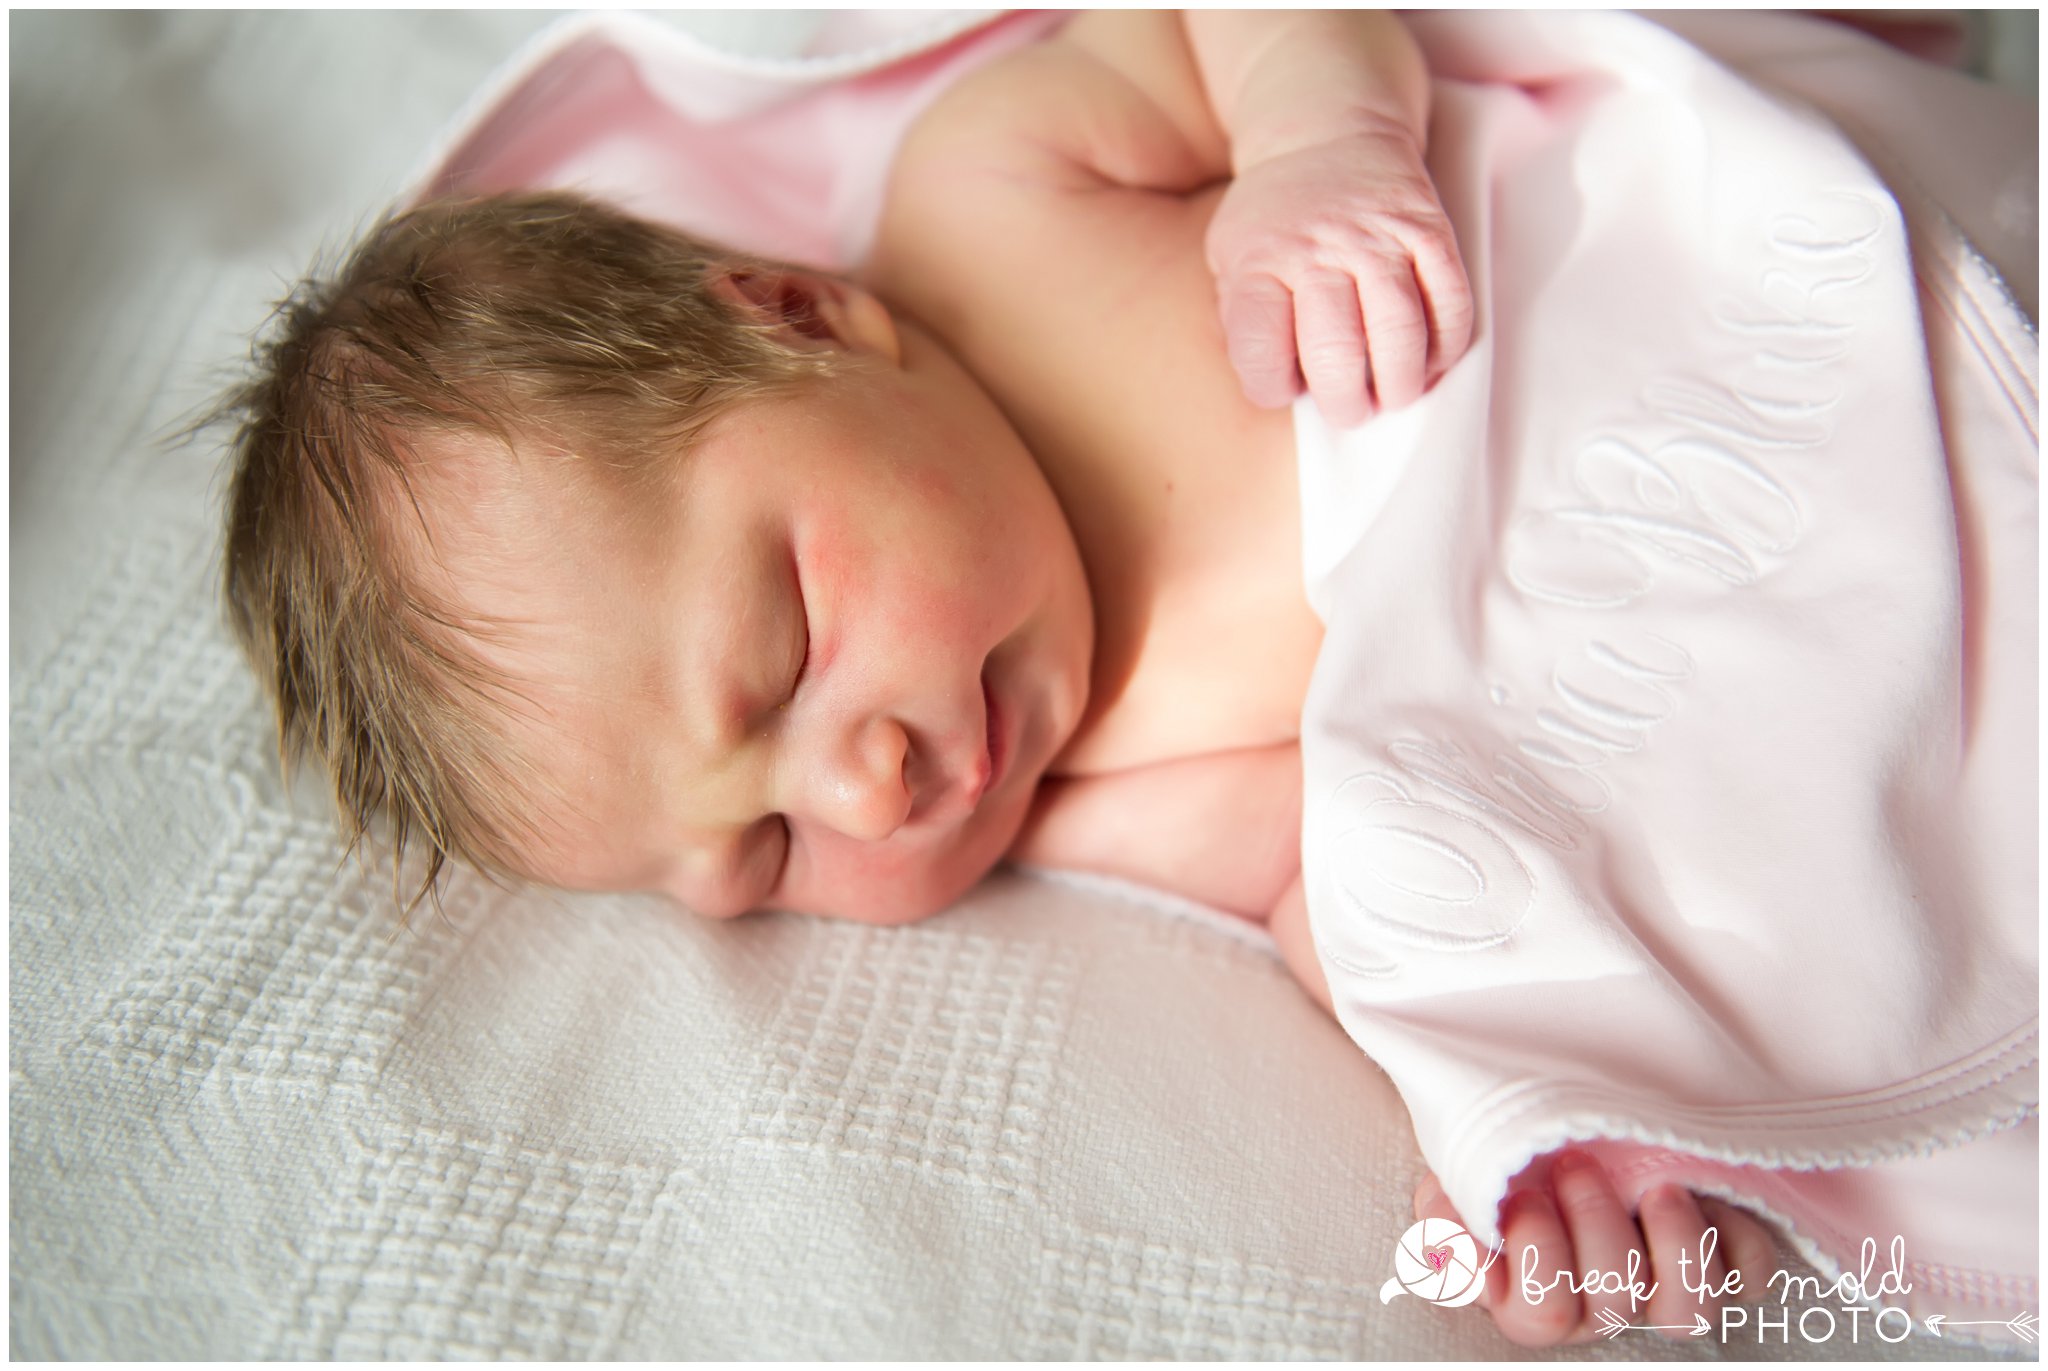 fresh-24-newborn-in-hospital-break-the-mold-photo-baby-girl-sweet-in-room-photos (18).jpg